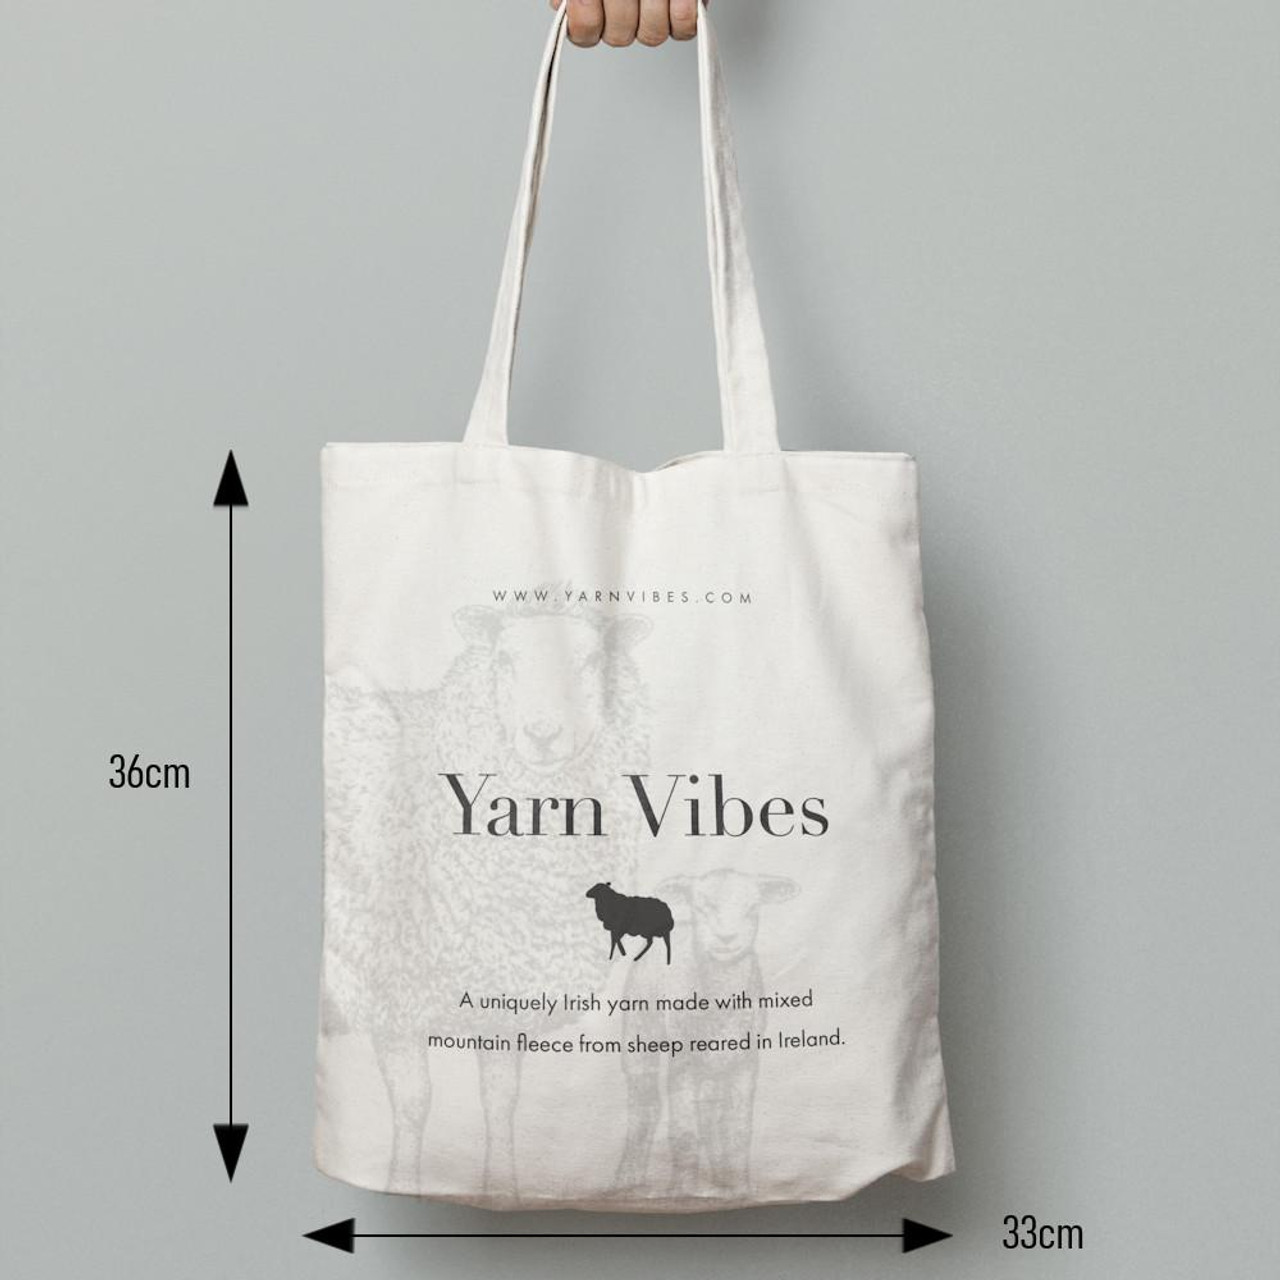 I Love Yarn Tote bag